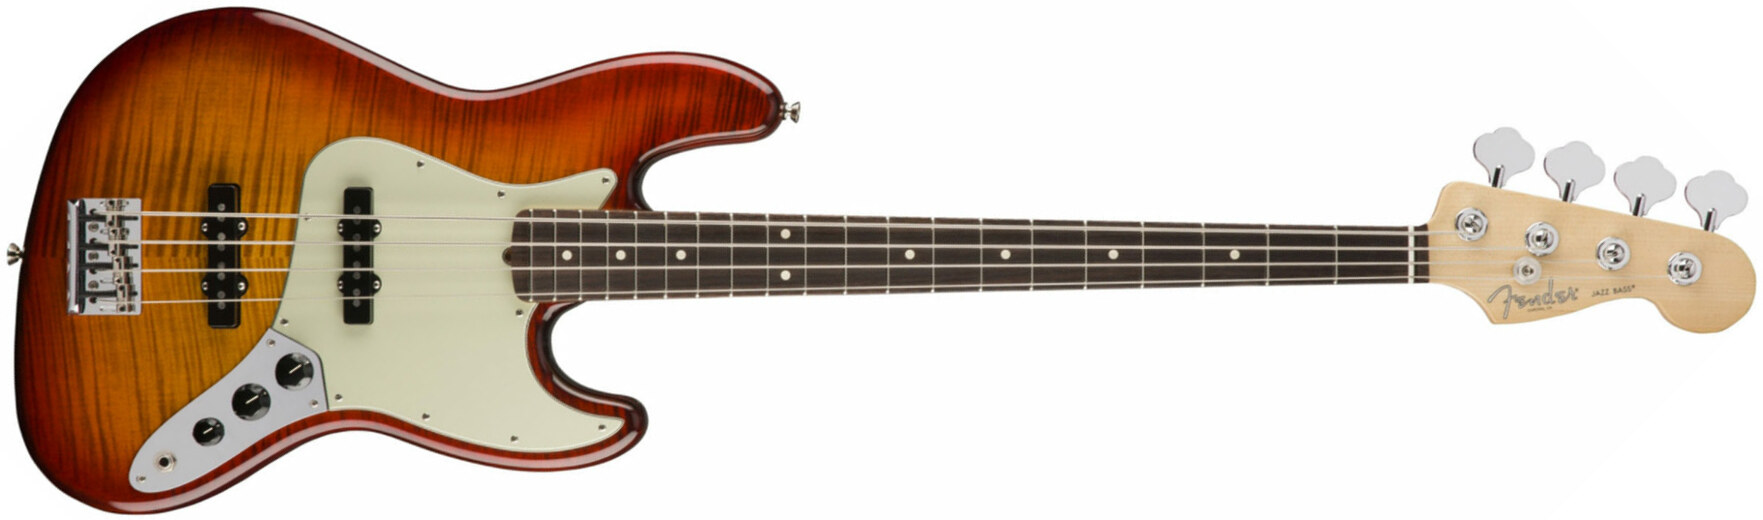 Fender Jazz Bass Fmt American Professional 2017 Ltd Usa Rw - Antique Cherry Burst - Bajo eléctrico de cuerpo sólido - Main picture